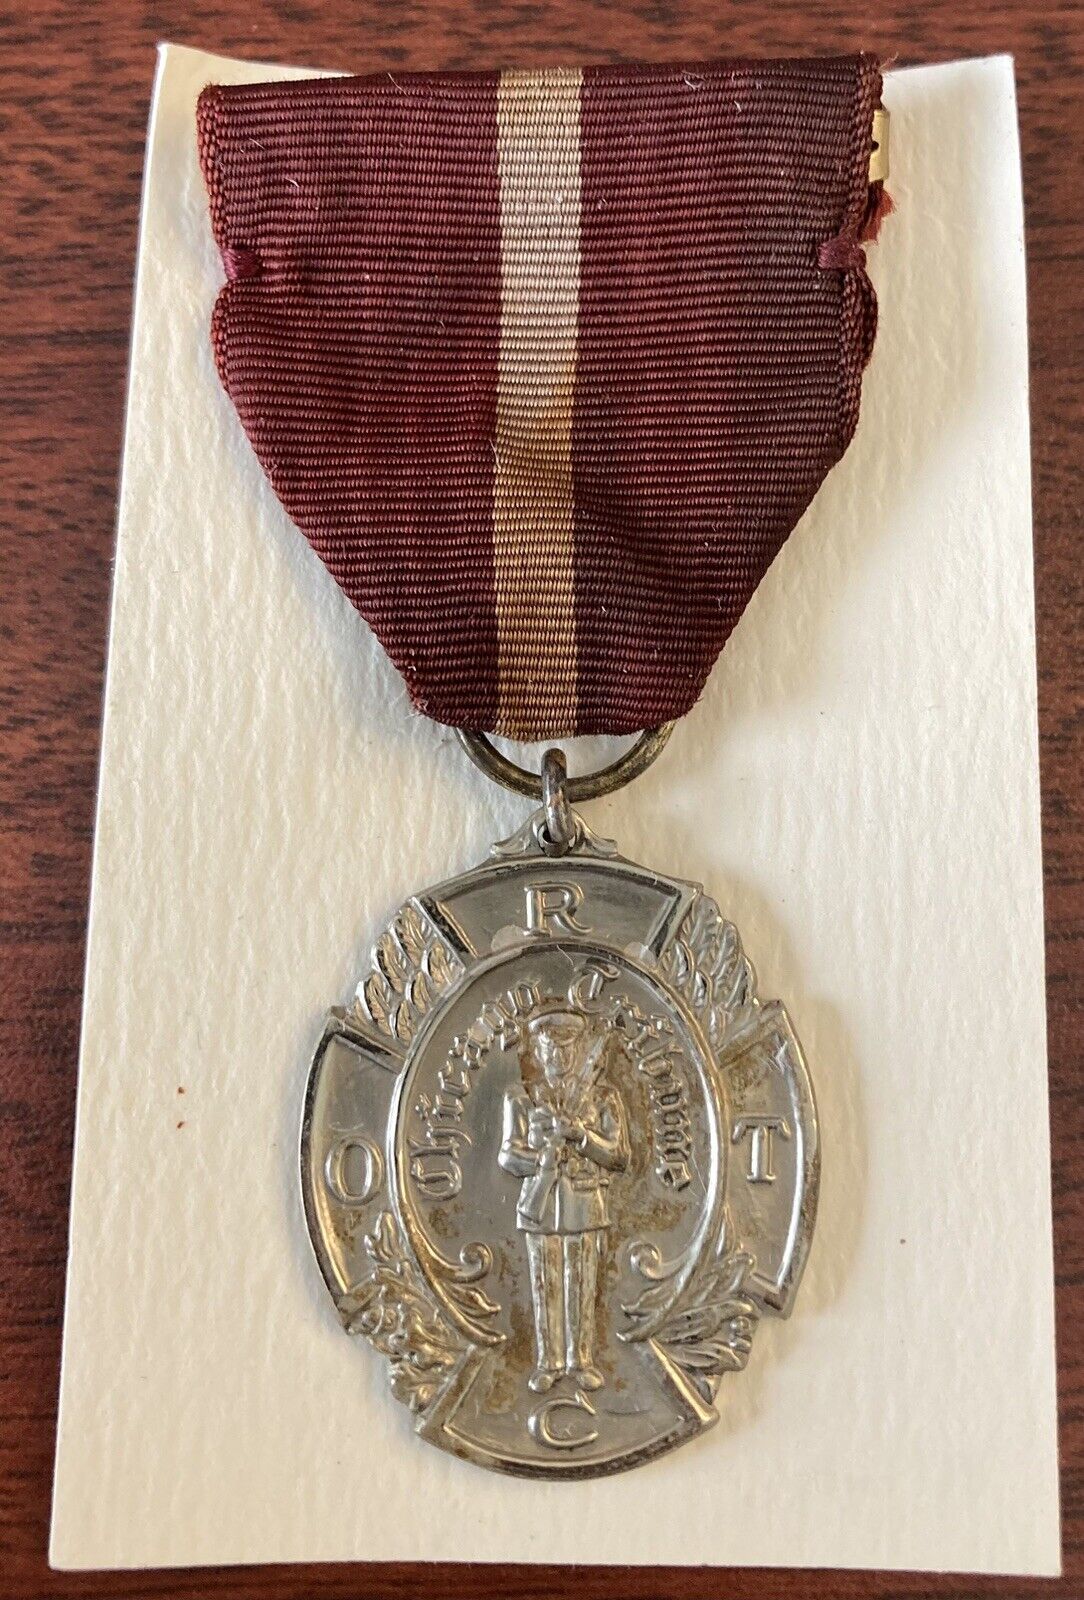 ROTC Chicago Tribune Military Merit Hallmark Medal Ribbon Pin Insignia c 1962